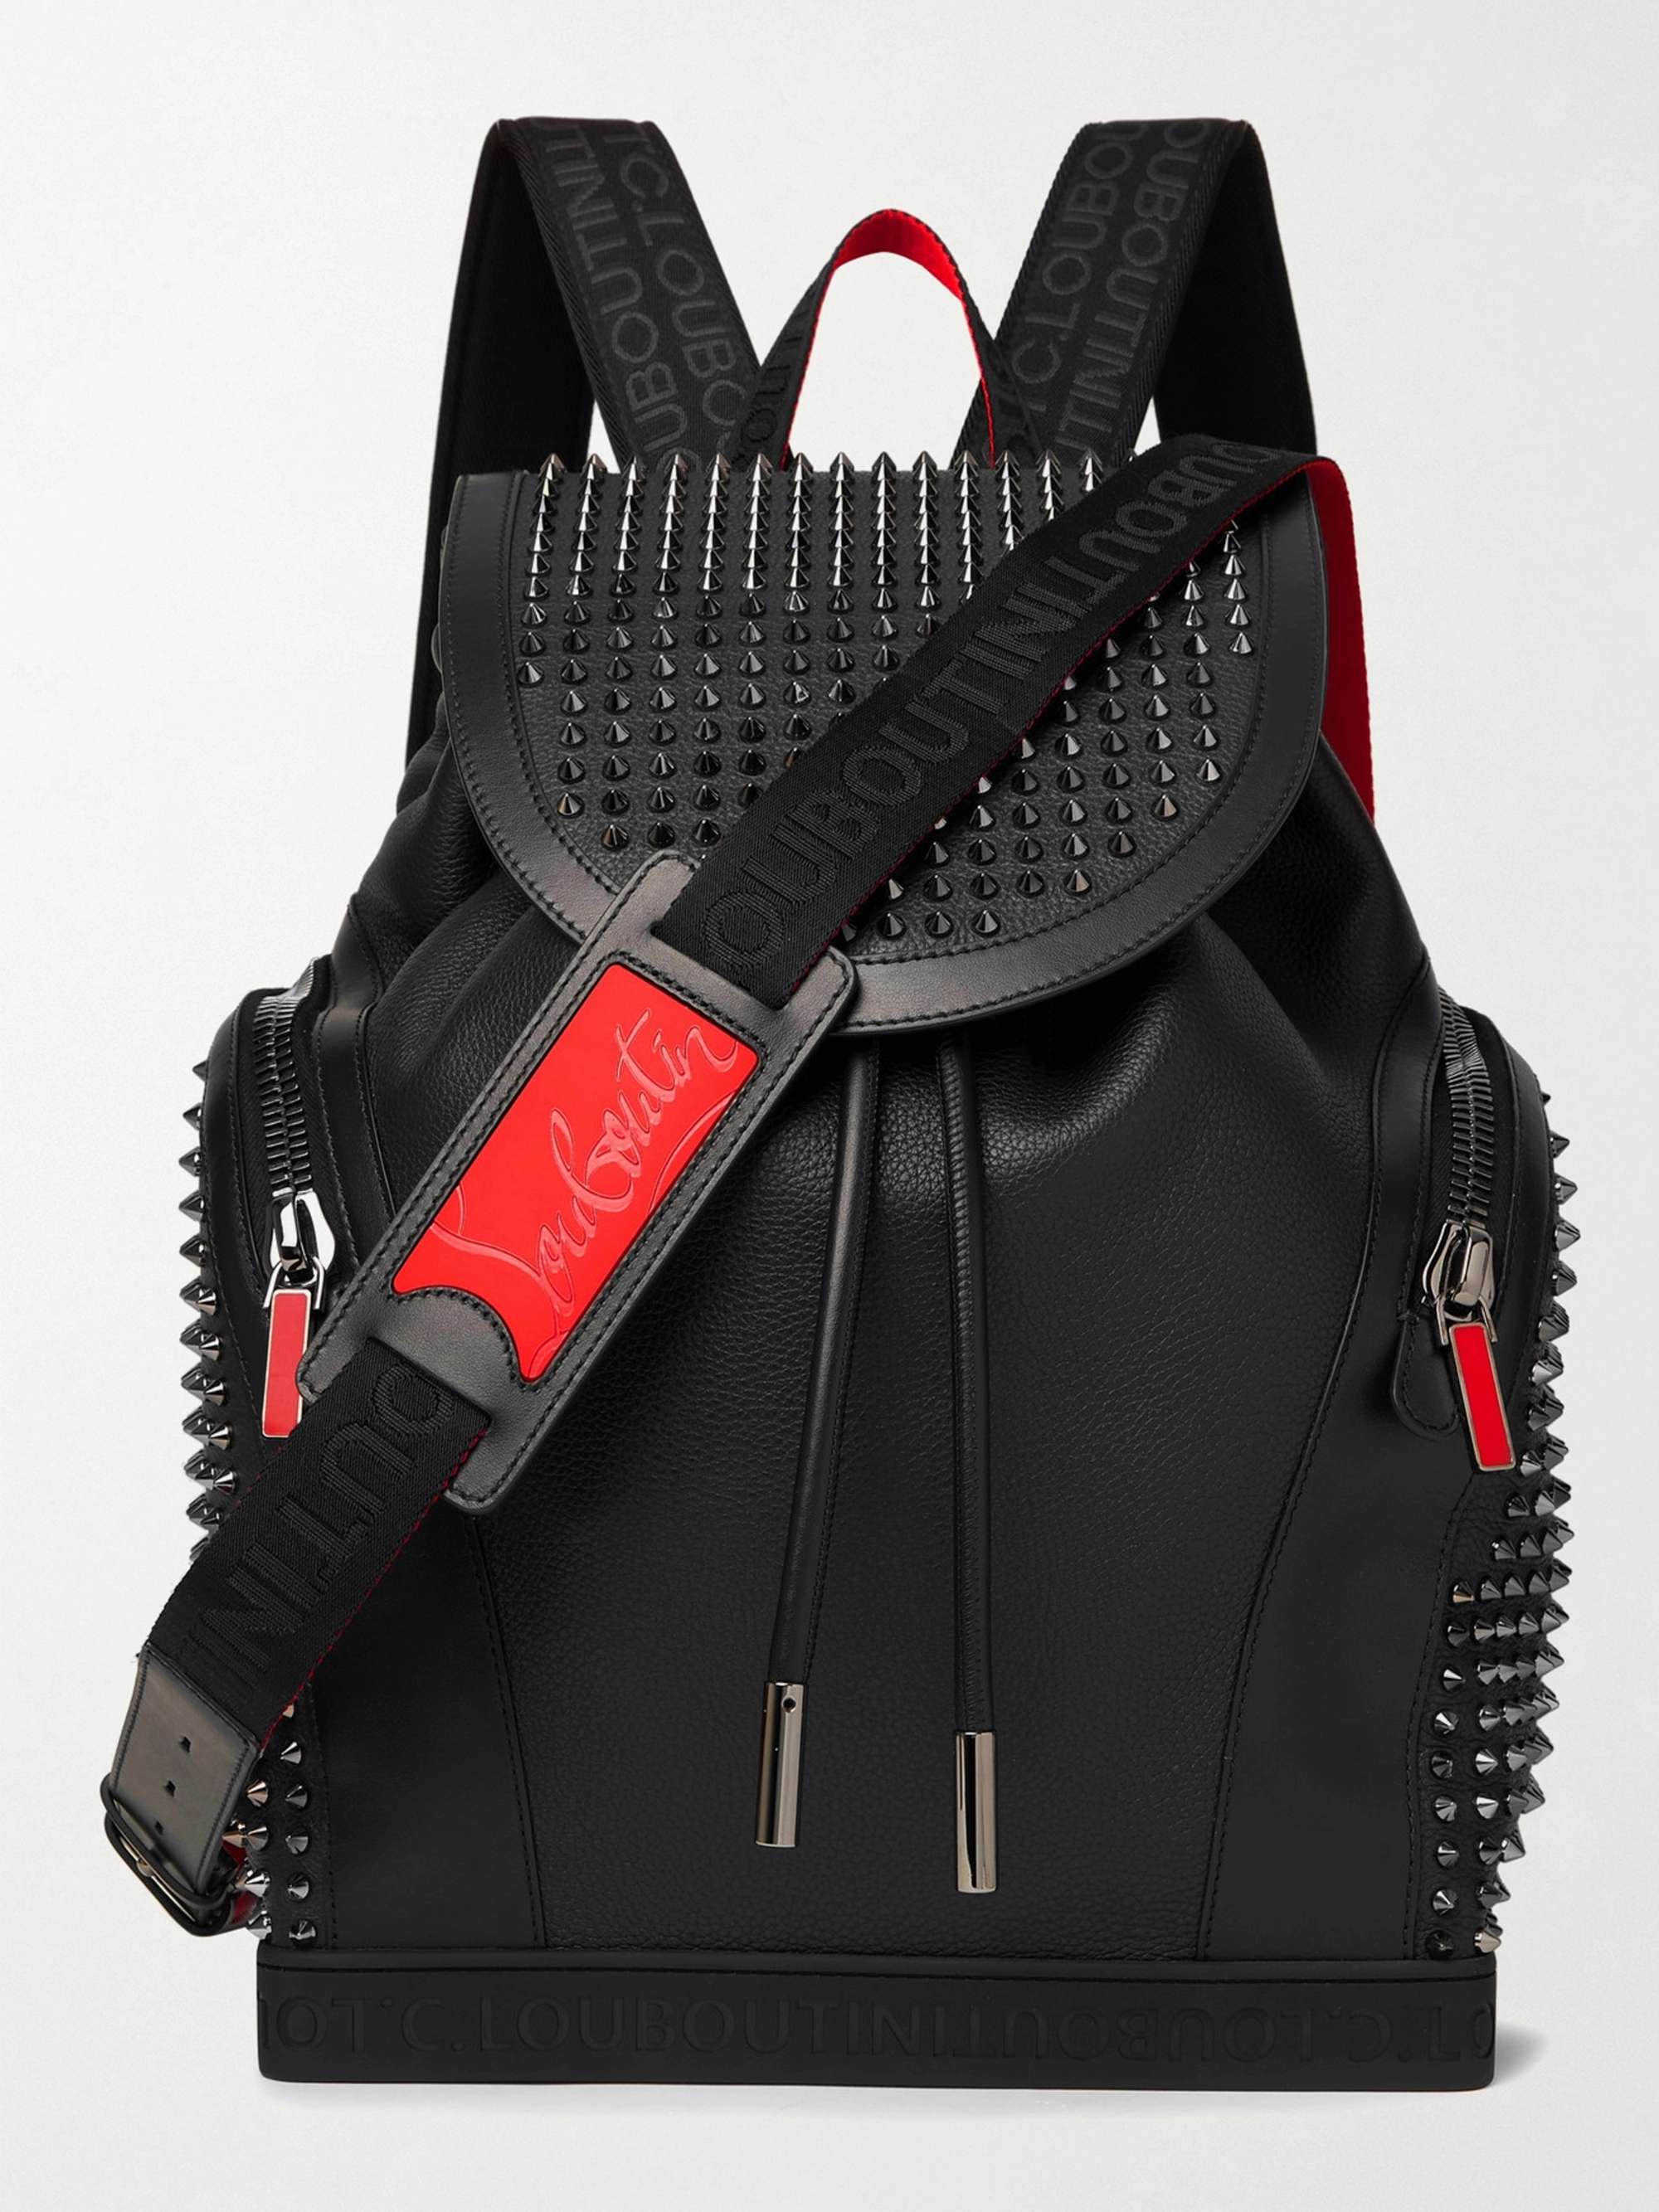 Christian Louboutin Explorafunk Spikes Leather Cross-body Bag in